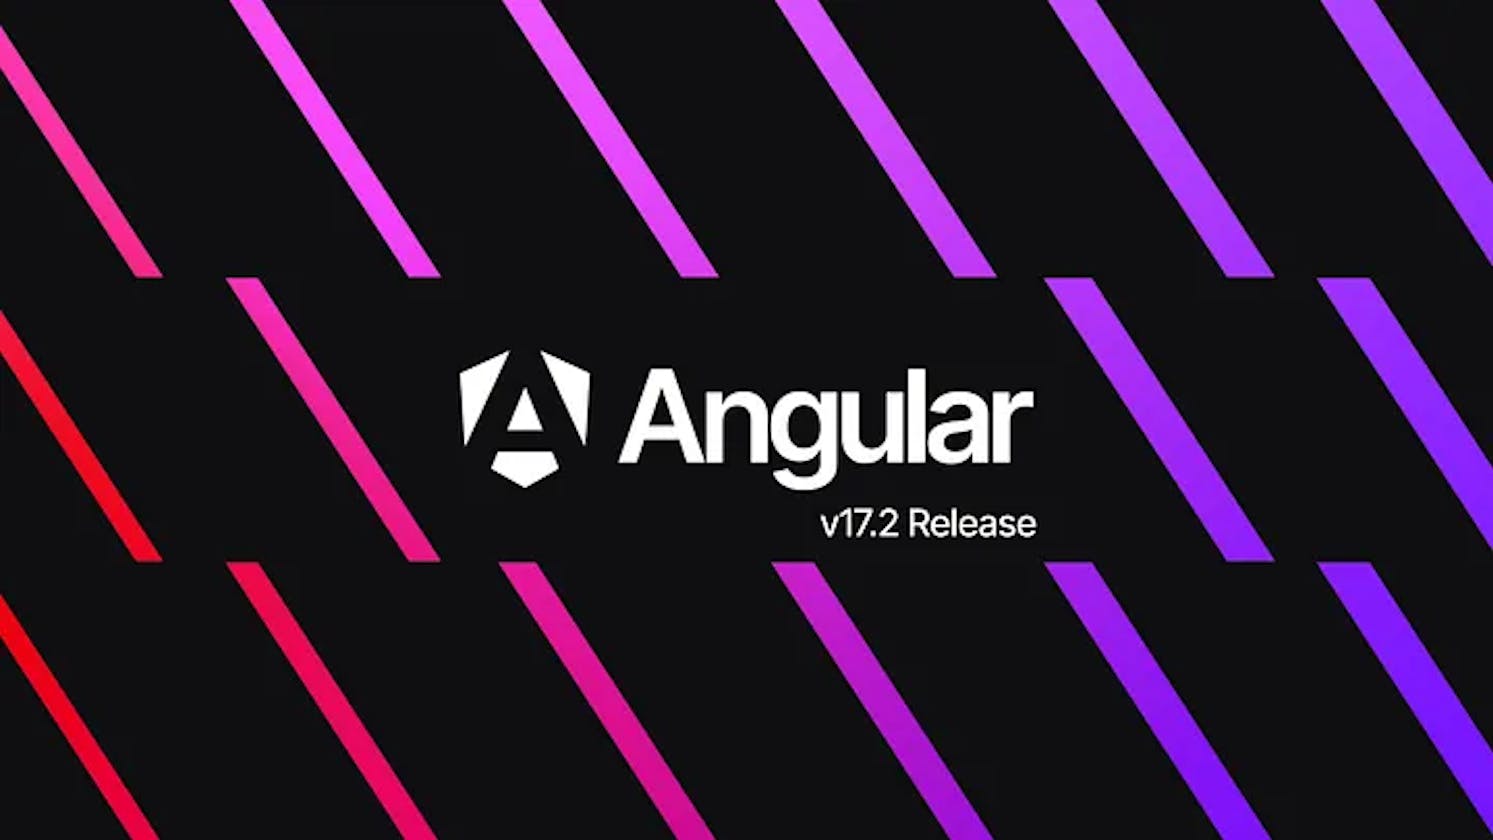 Angular 17.2 is already here